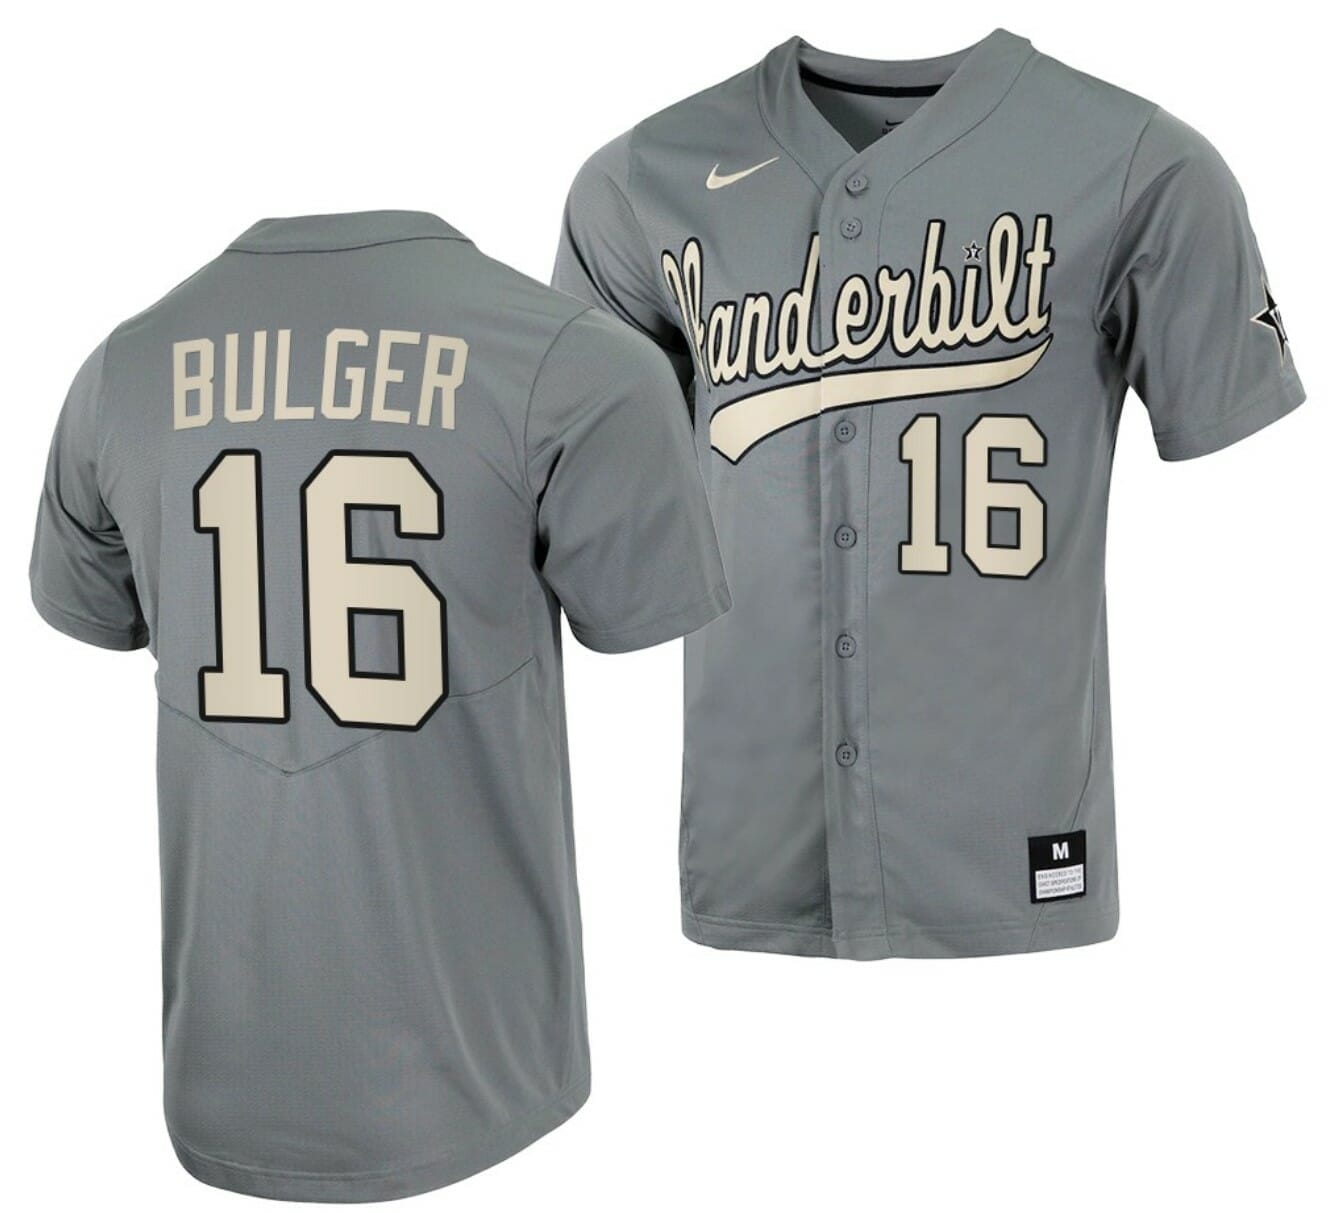 Available] Get New Jack Bulger Jersey Vanderbilt Grey #39